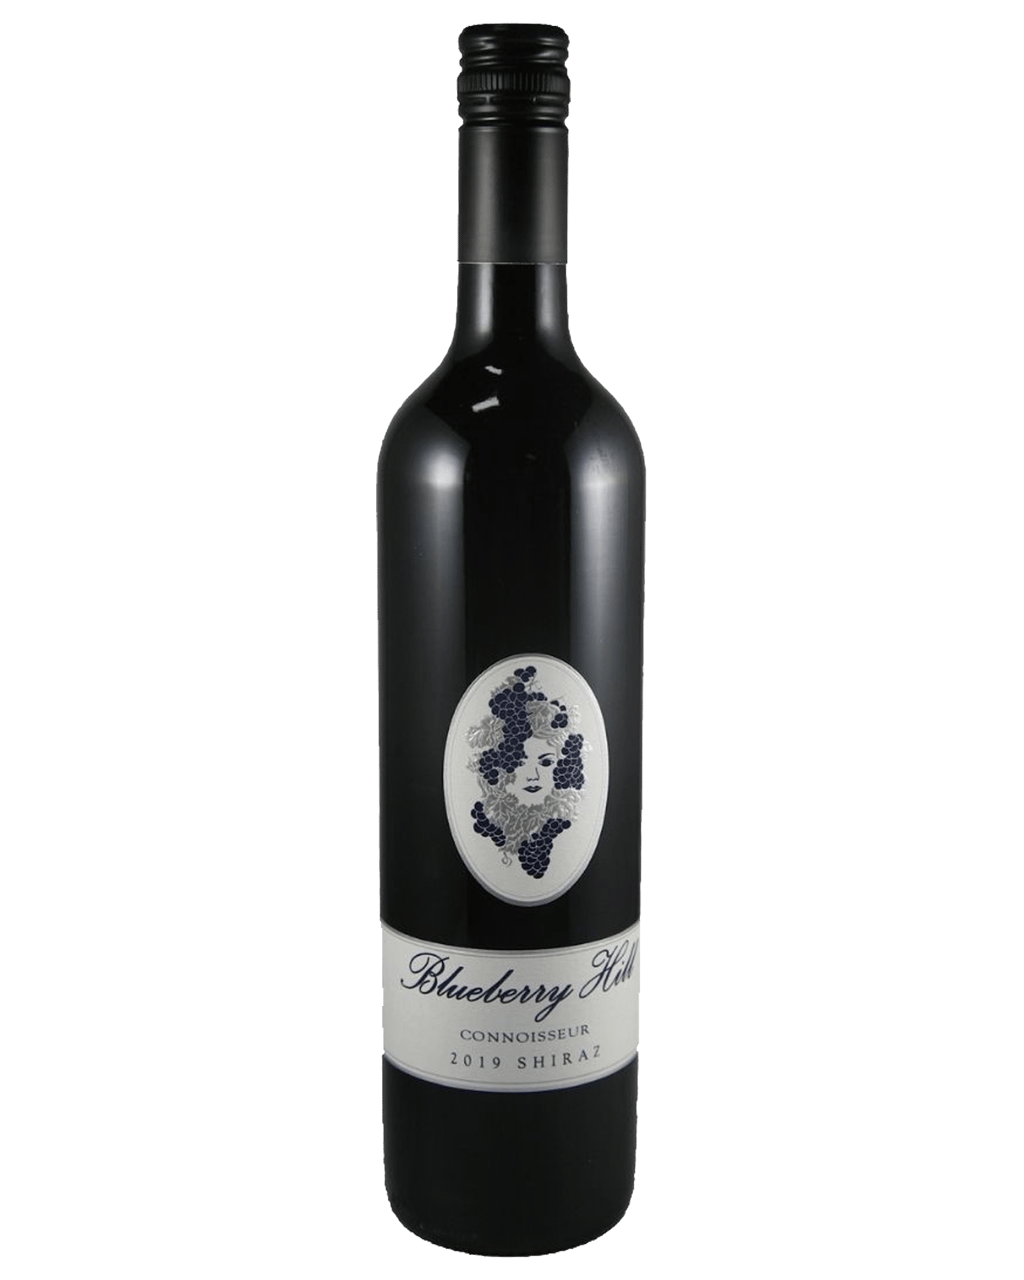 blueberry-hill-vineyard-connoisseur-shiraz-2019-unbeatable-prices